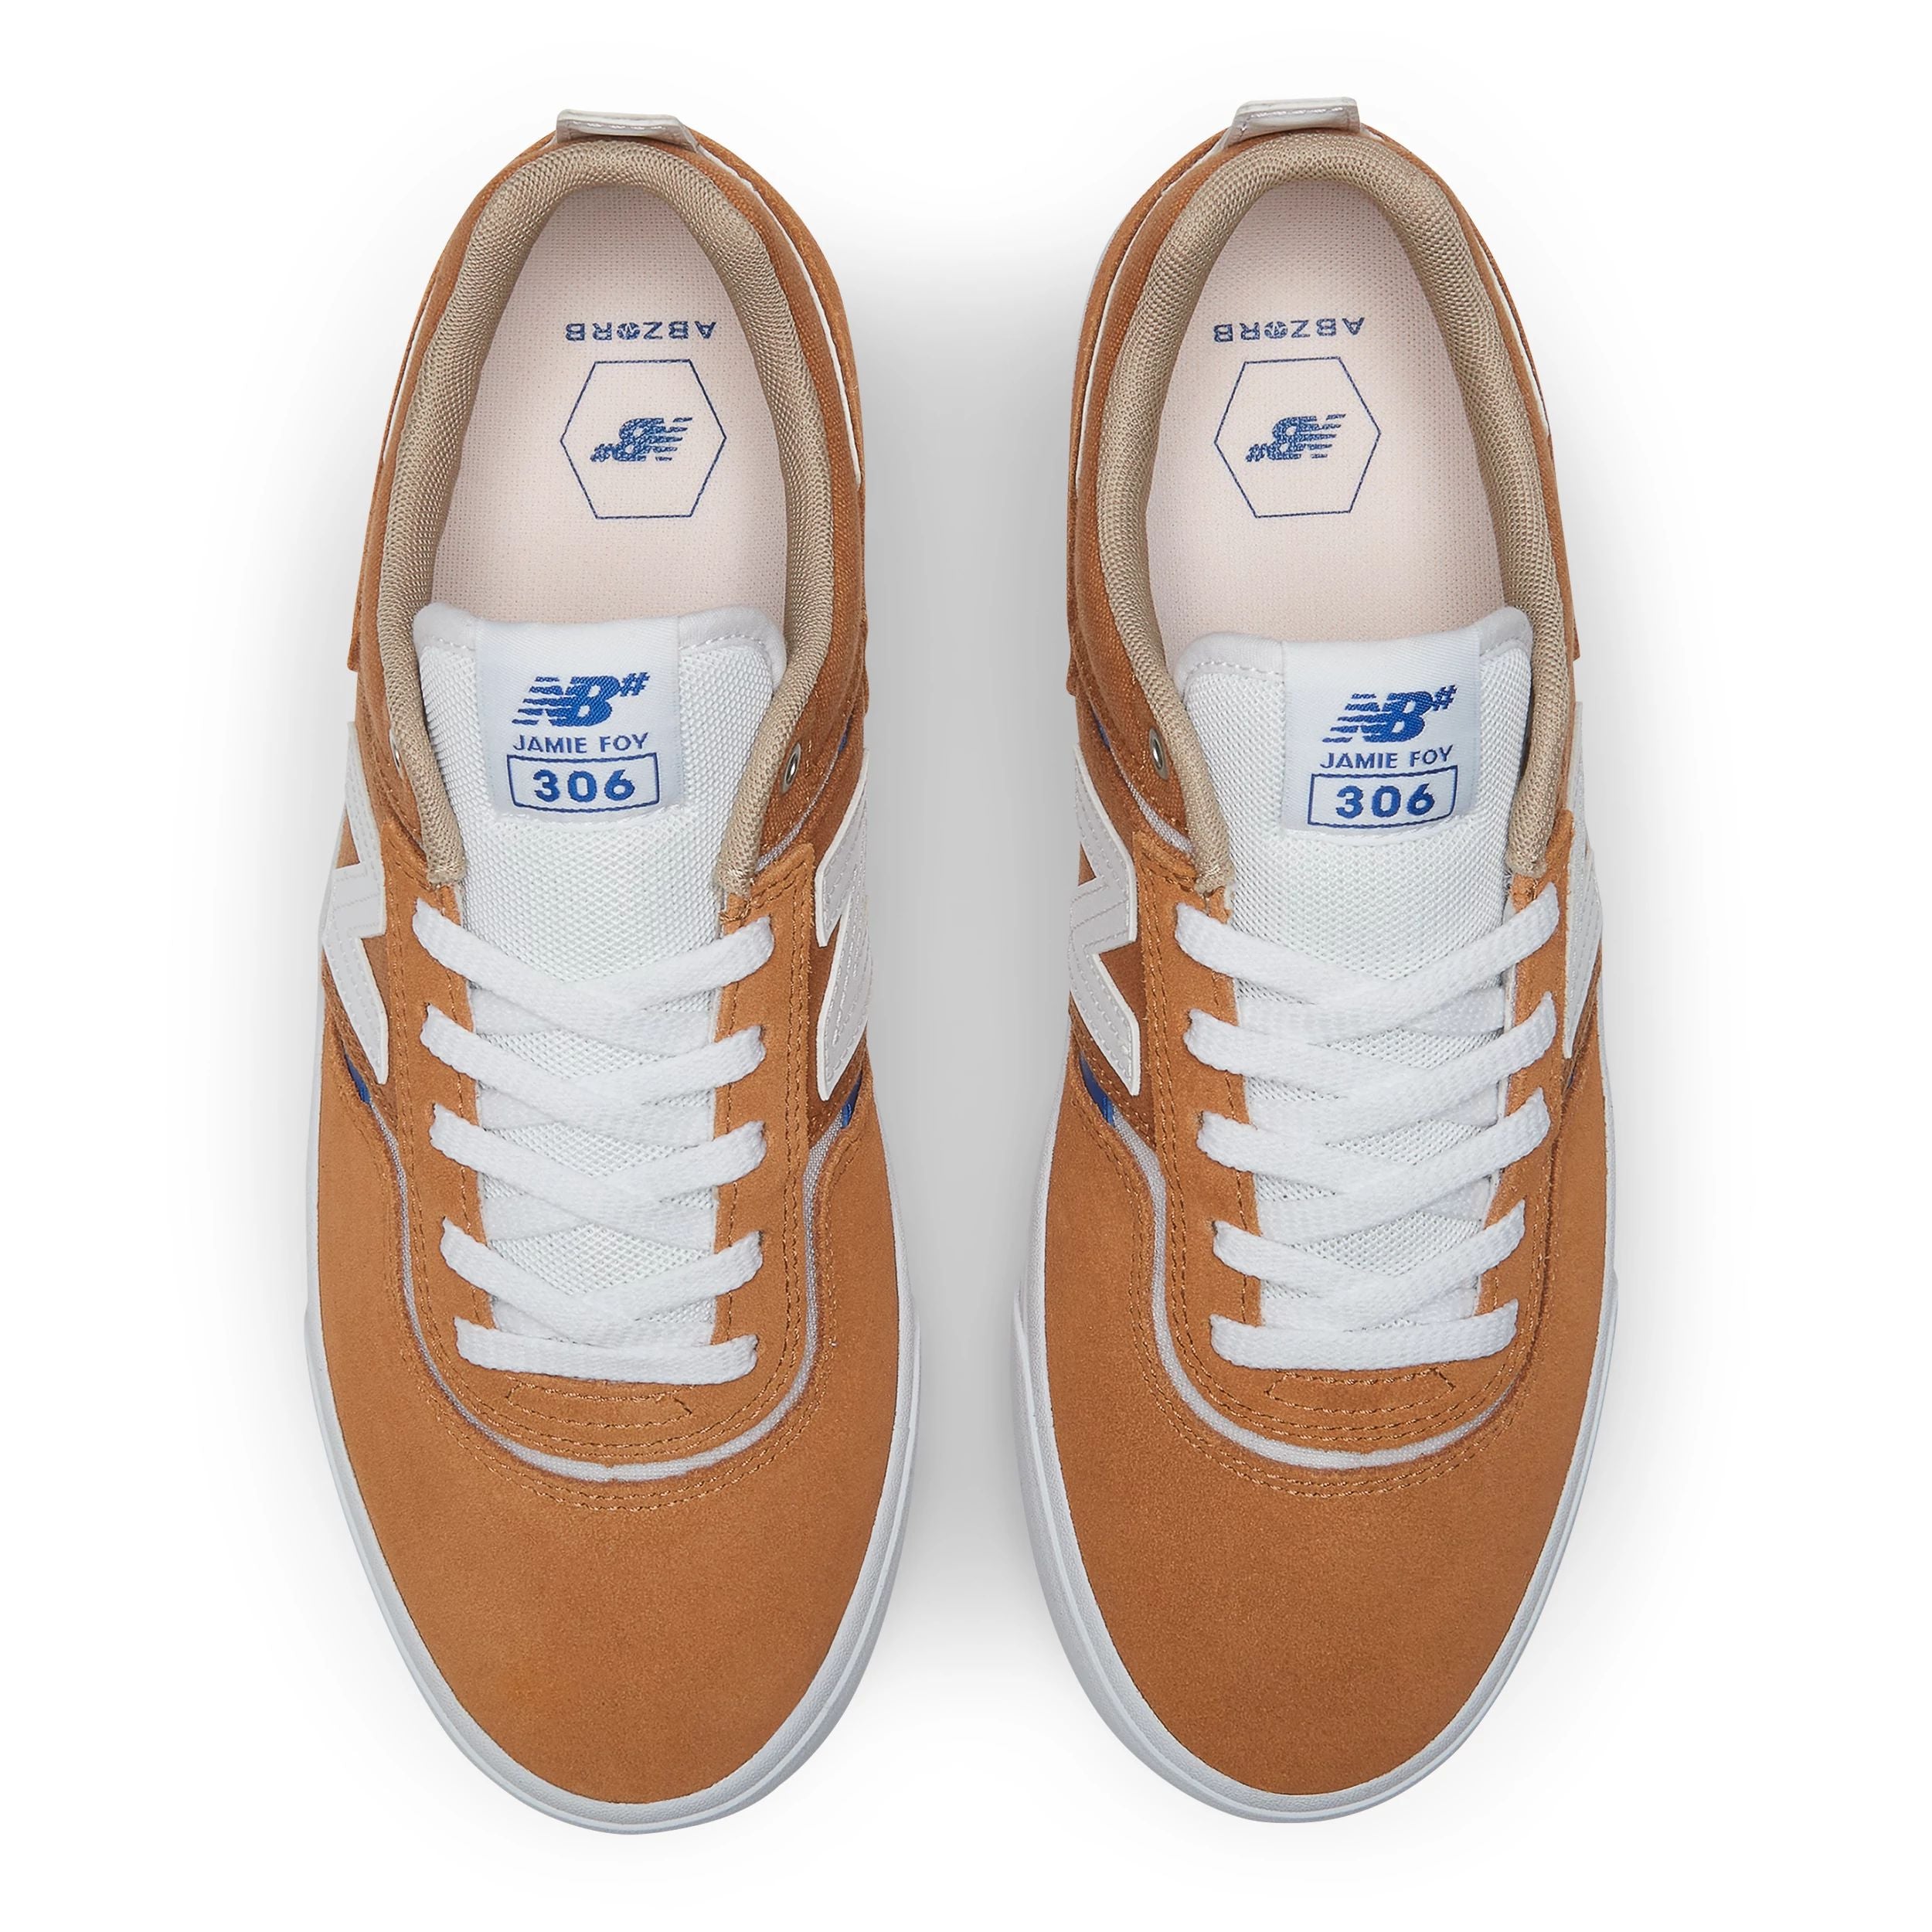 Brown/White NM306 Jamie Foy NB Numeric Skate Shoe Top